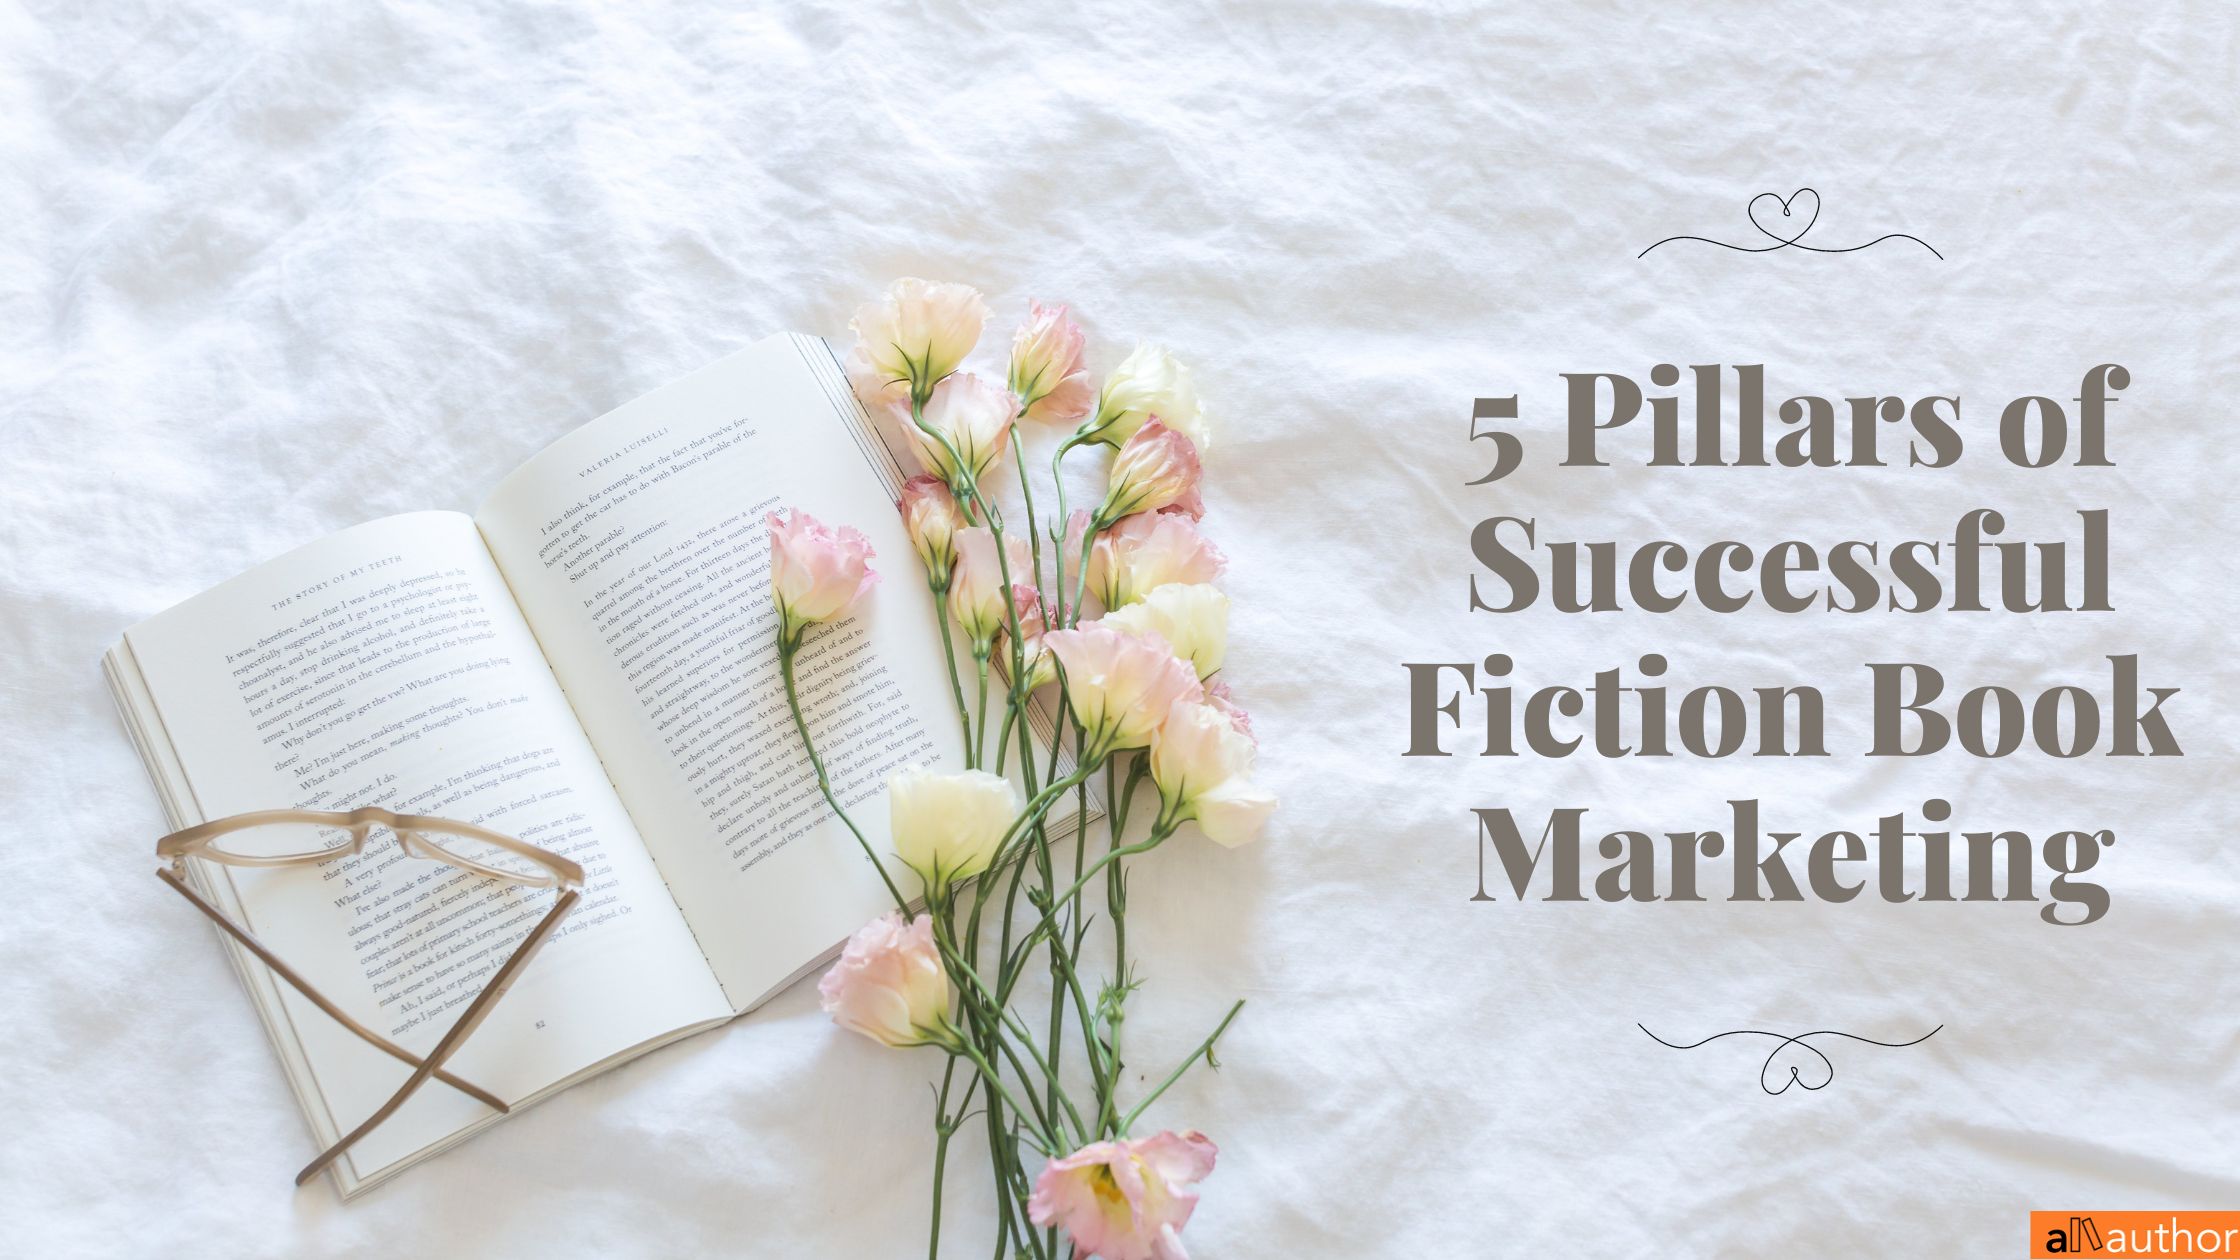 5 Pillars of Successful Fiction Book Marketing